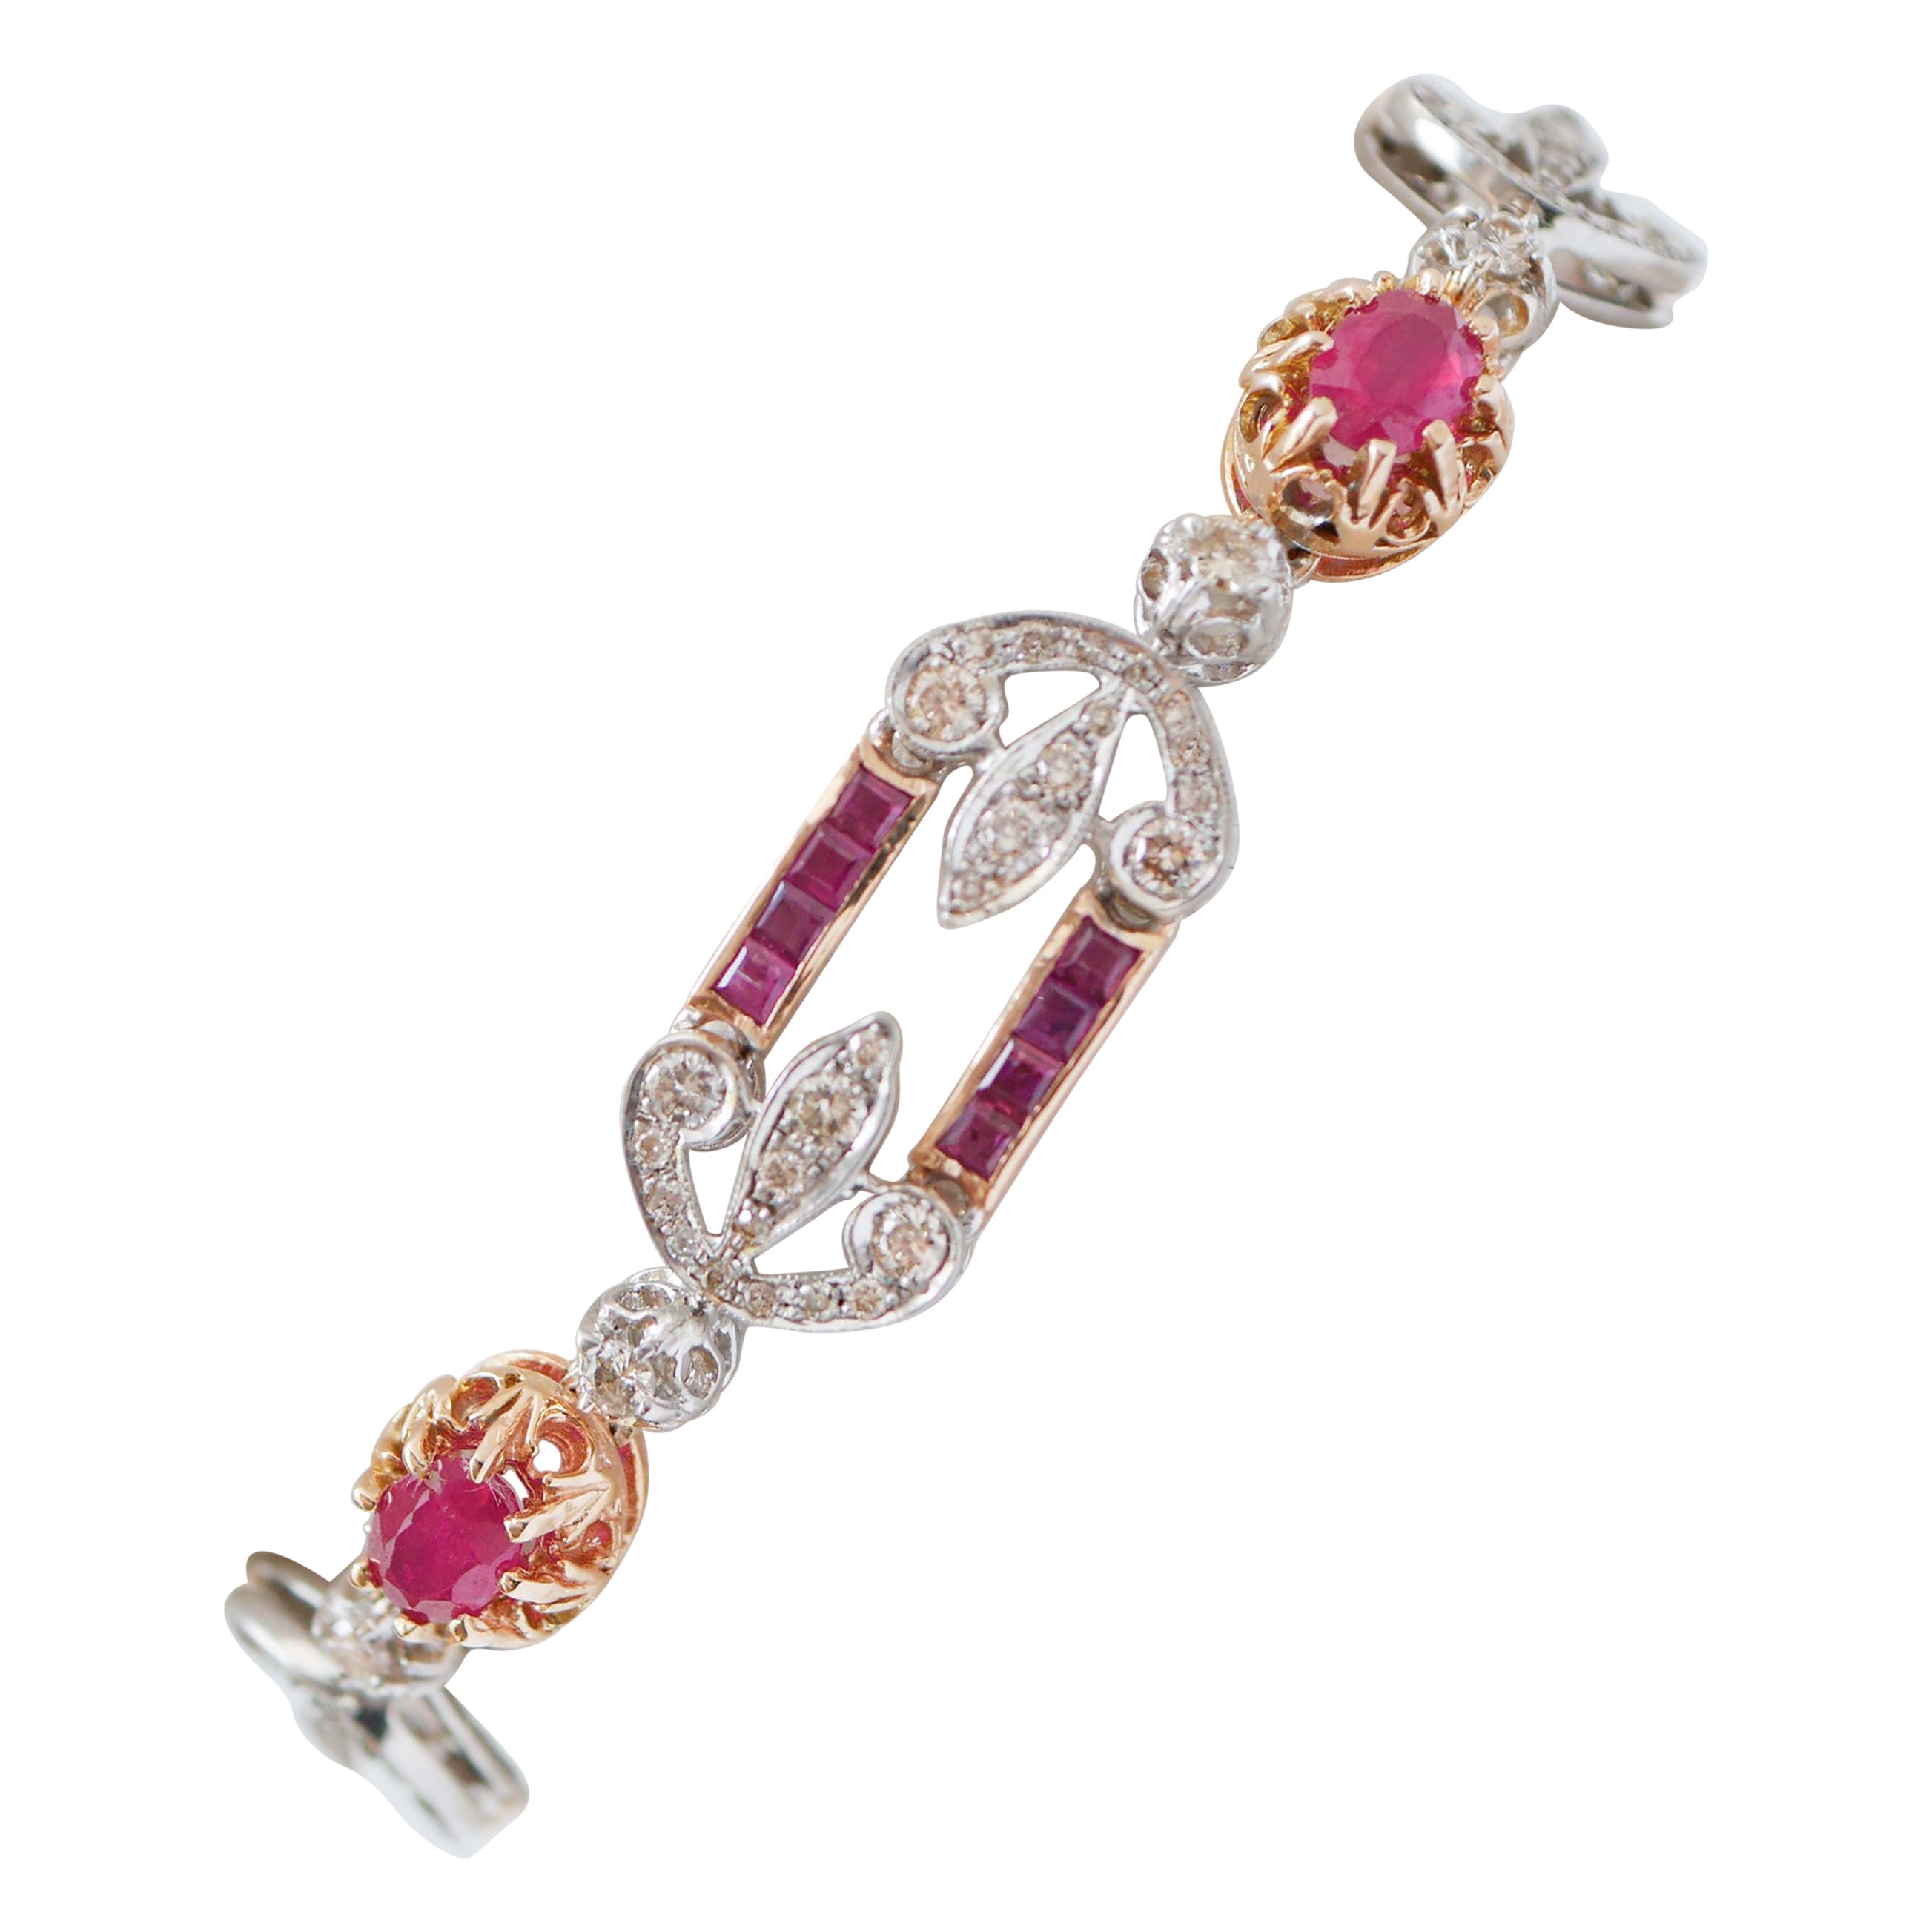 Rubies, Diamonds, 14 Karat Rose Gold and Silver Bracelet. For Sale